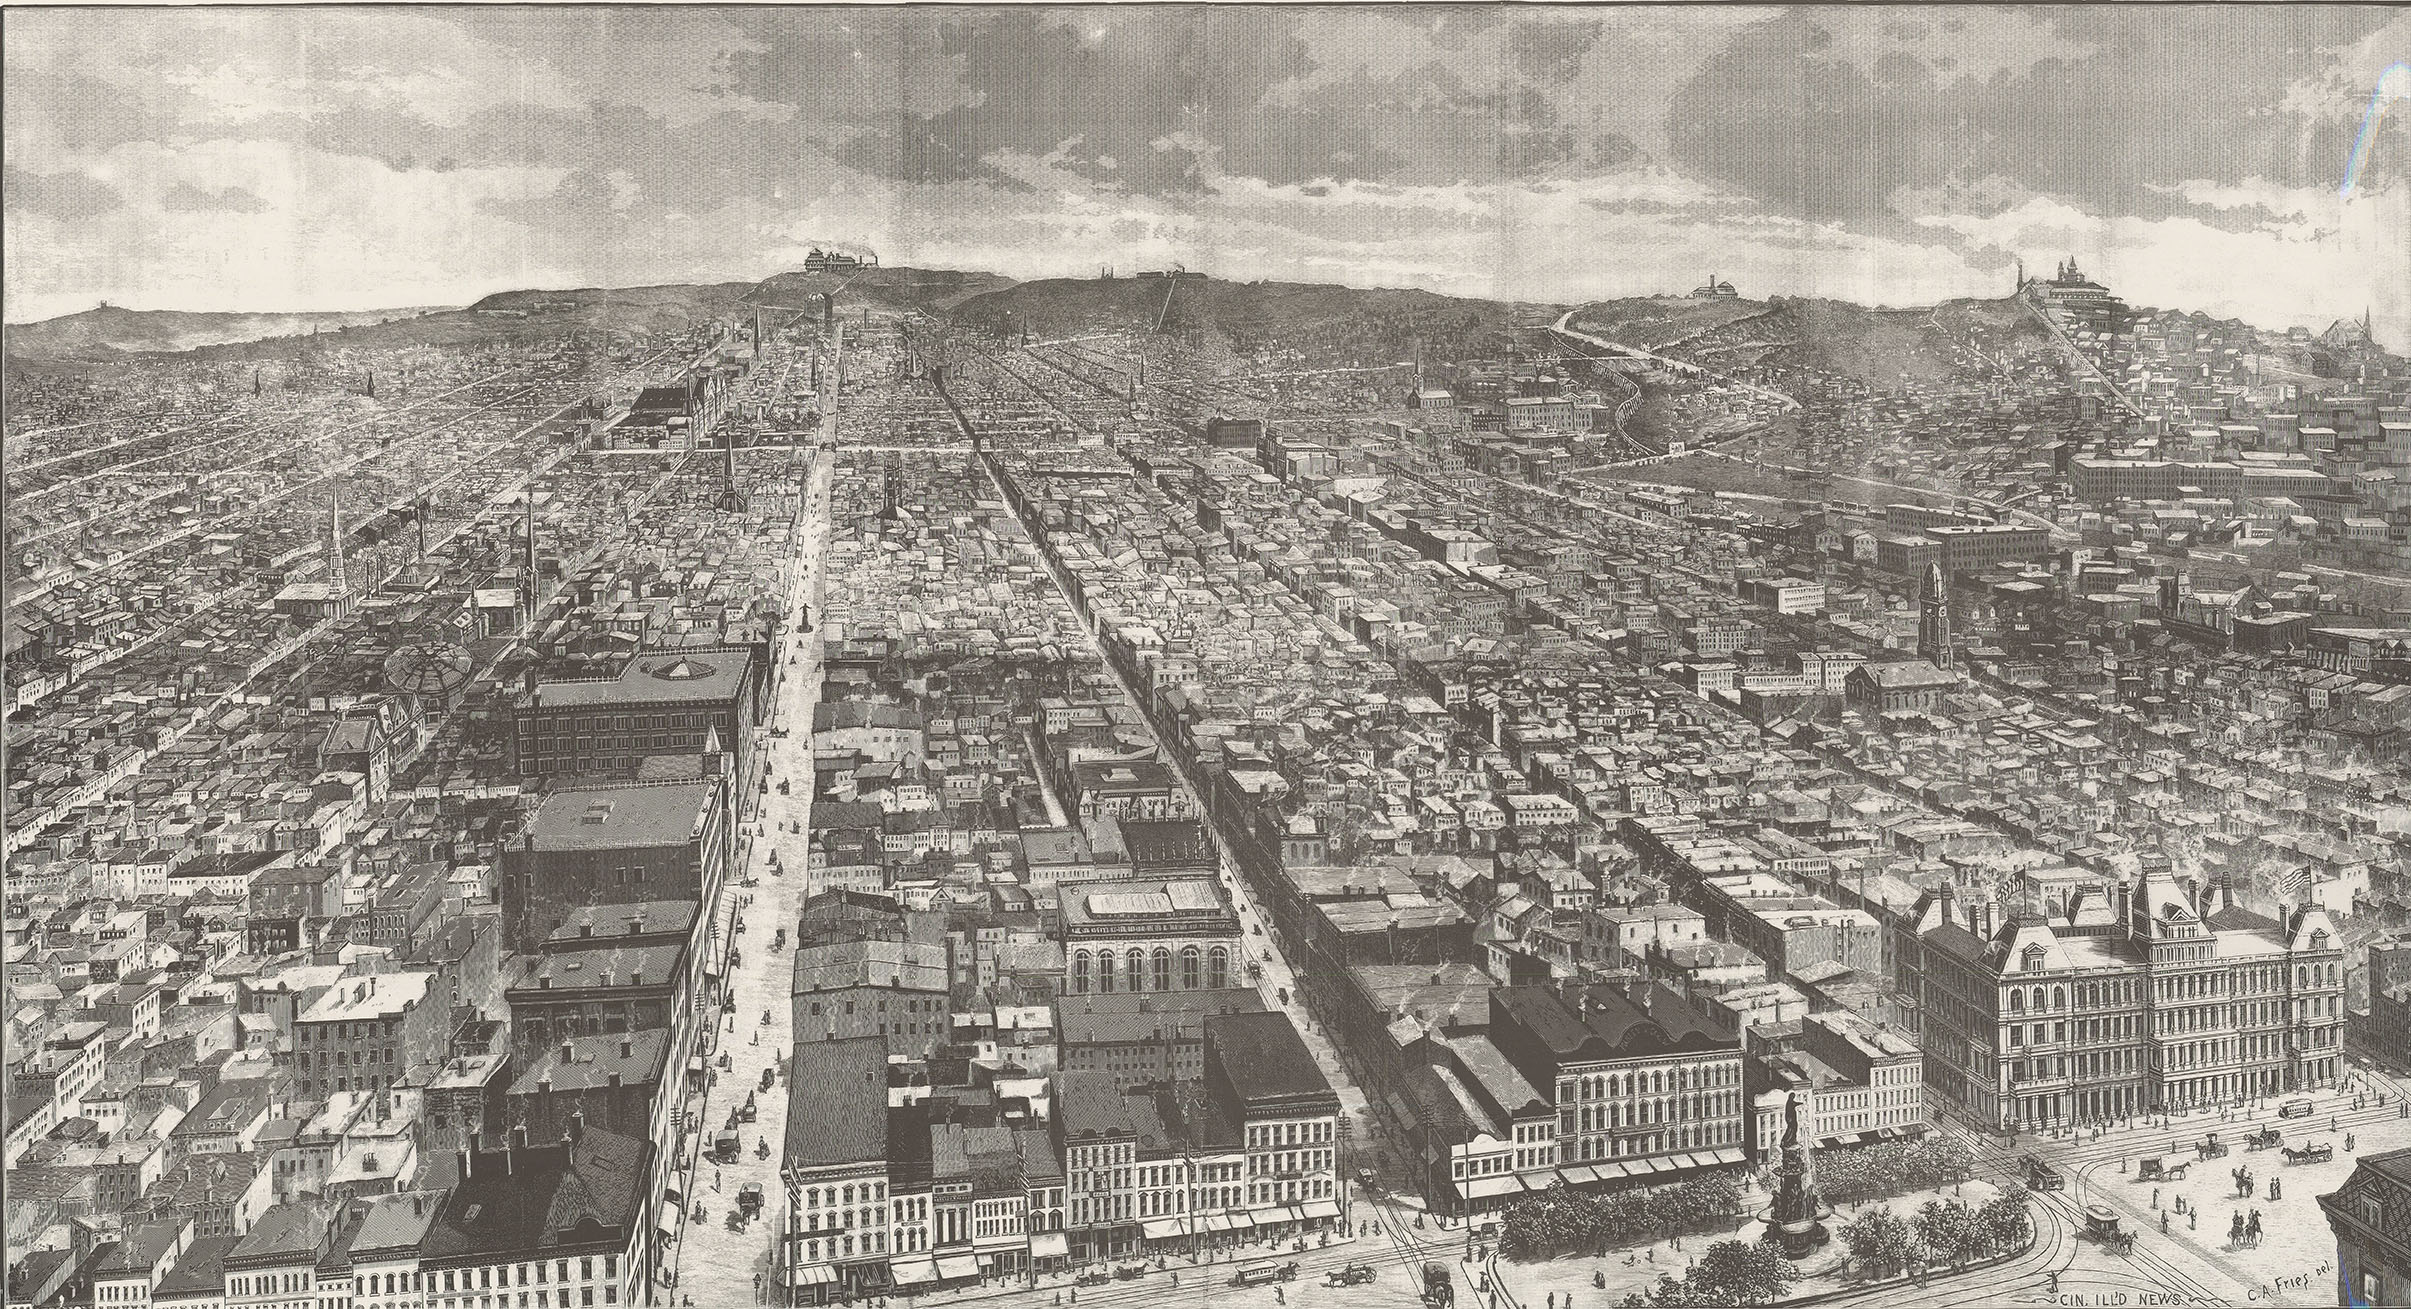 Cincinnati in the 1880s